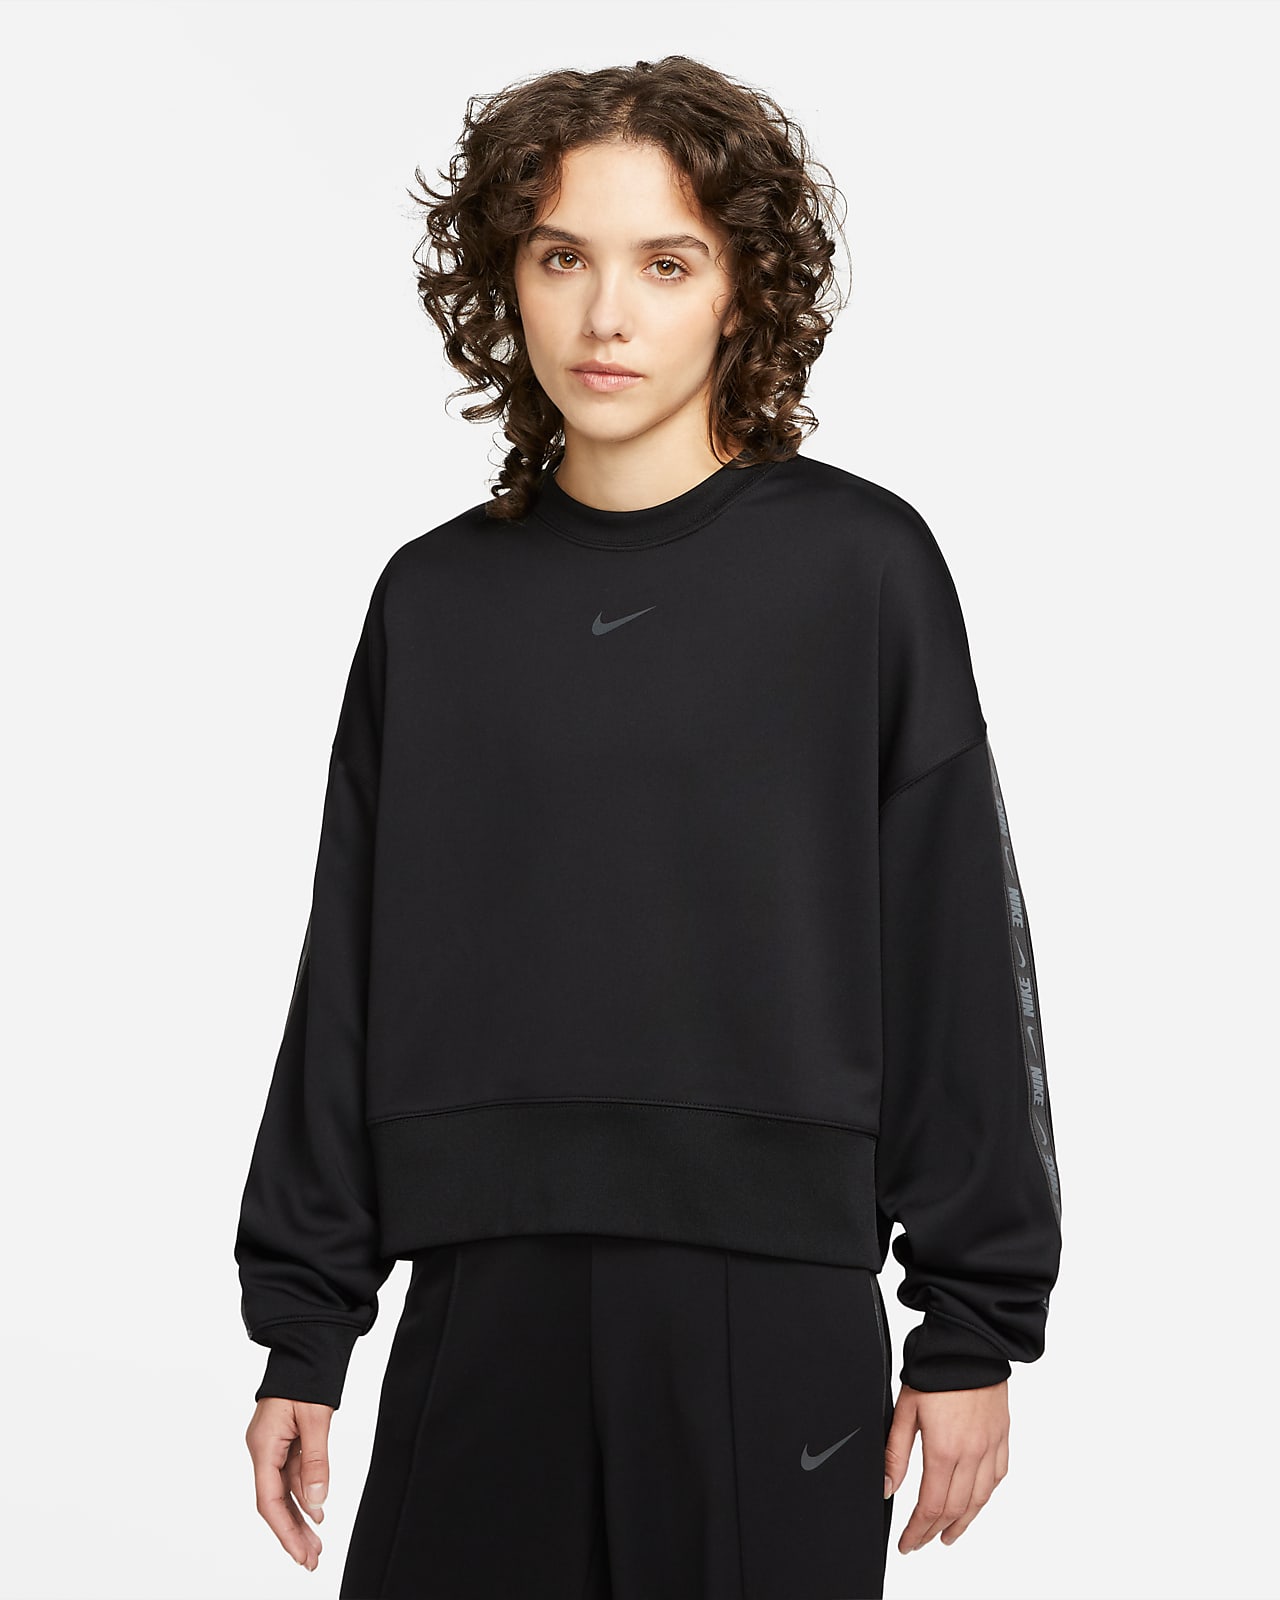 Overdimensioneret Nike Sportswear-sweatshirt til kvinder